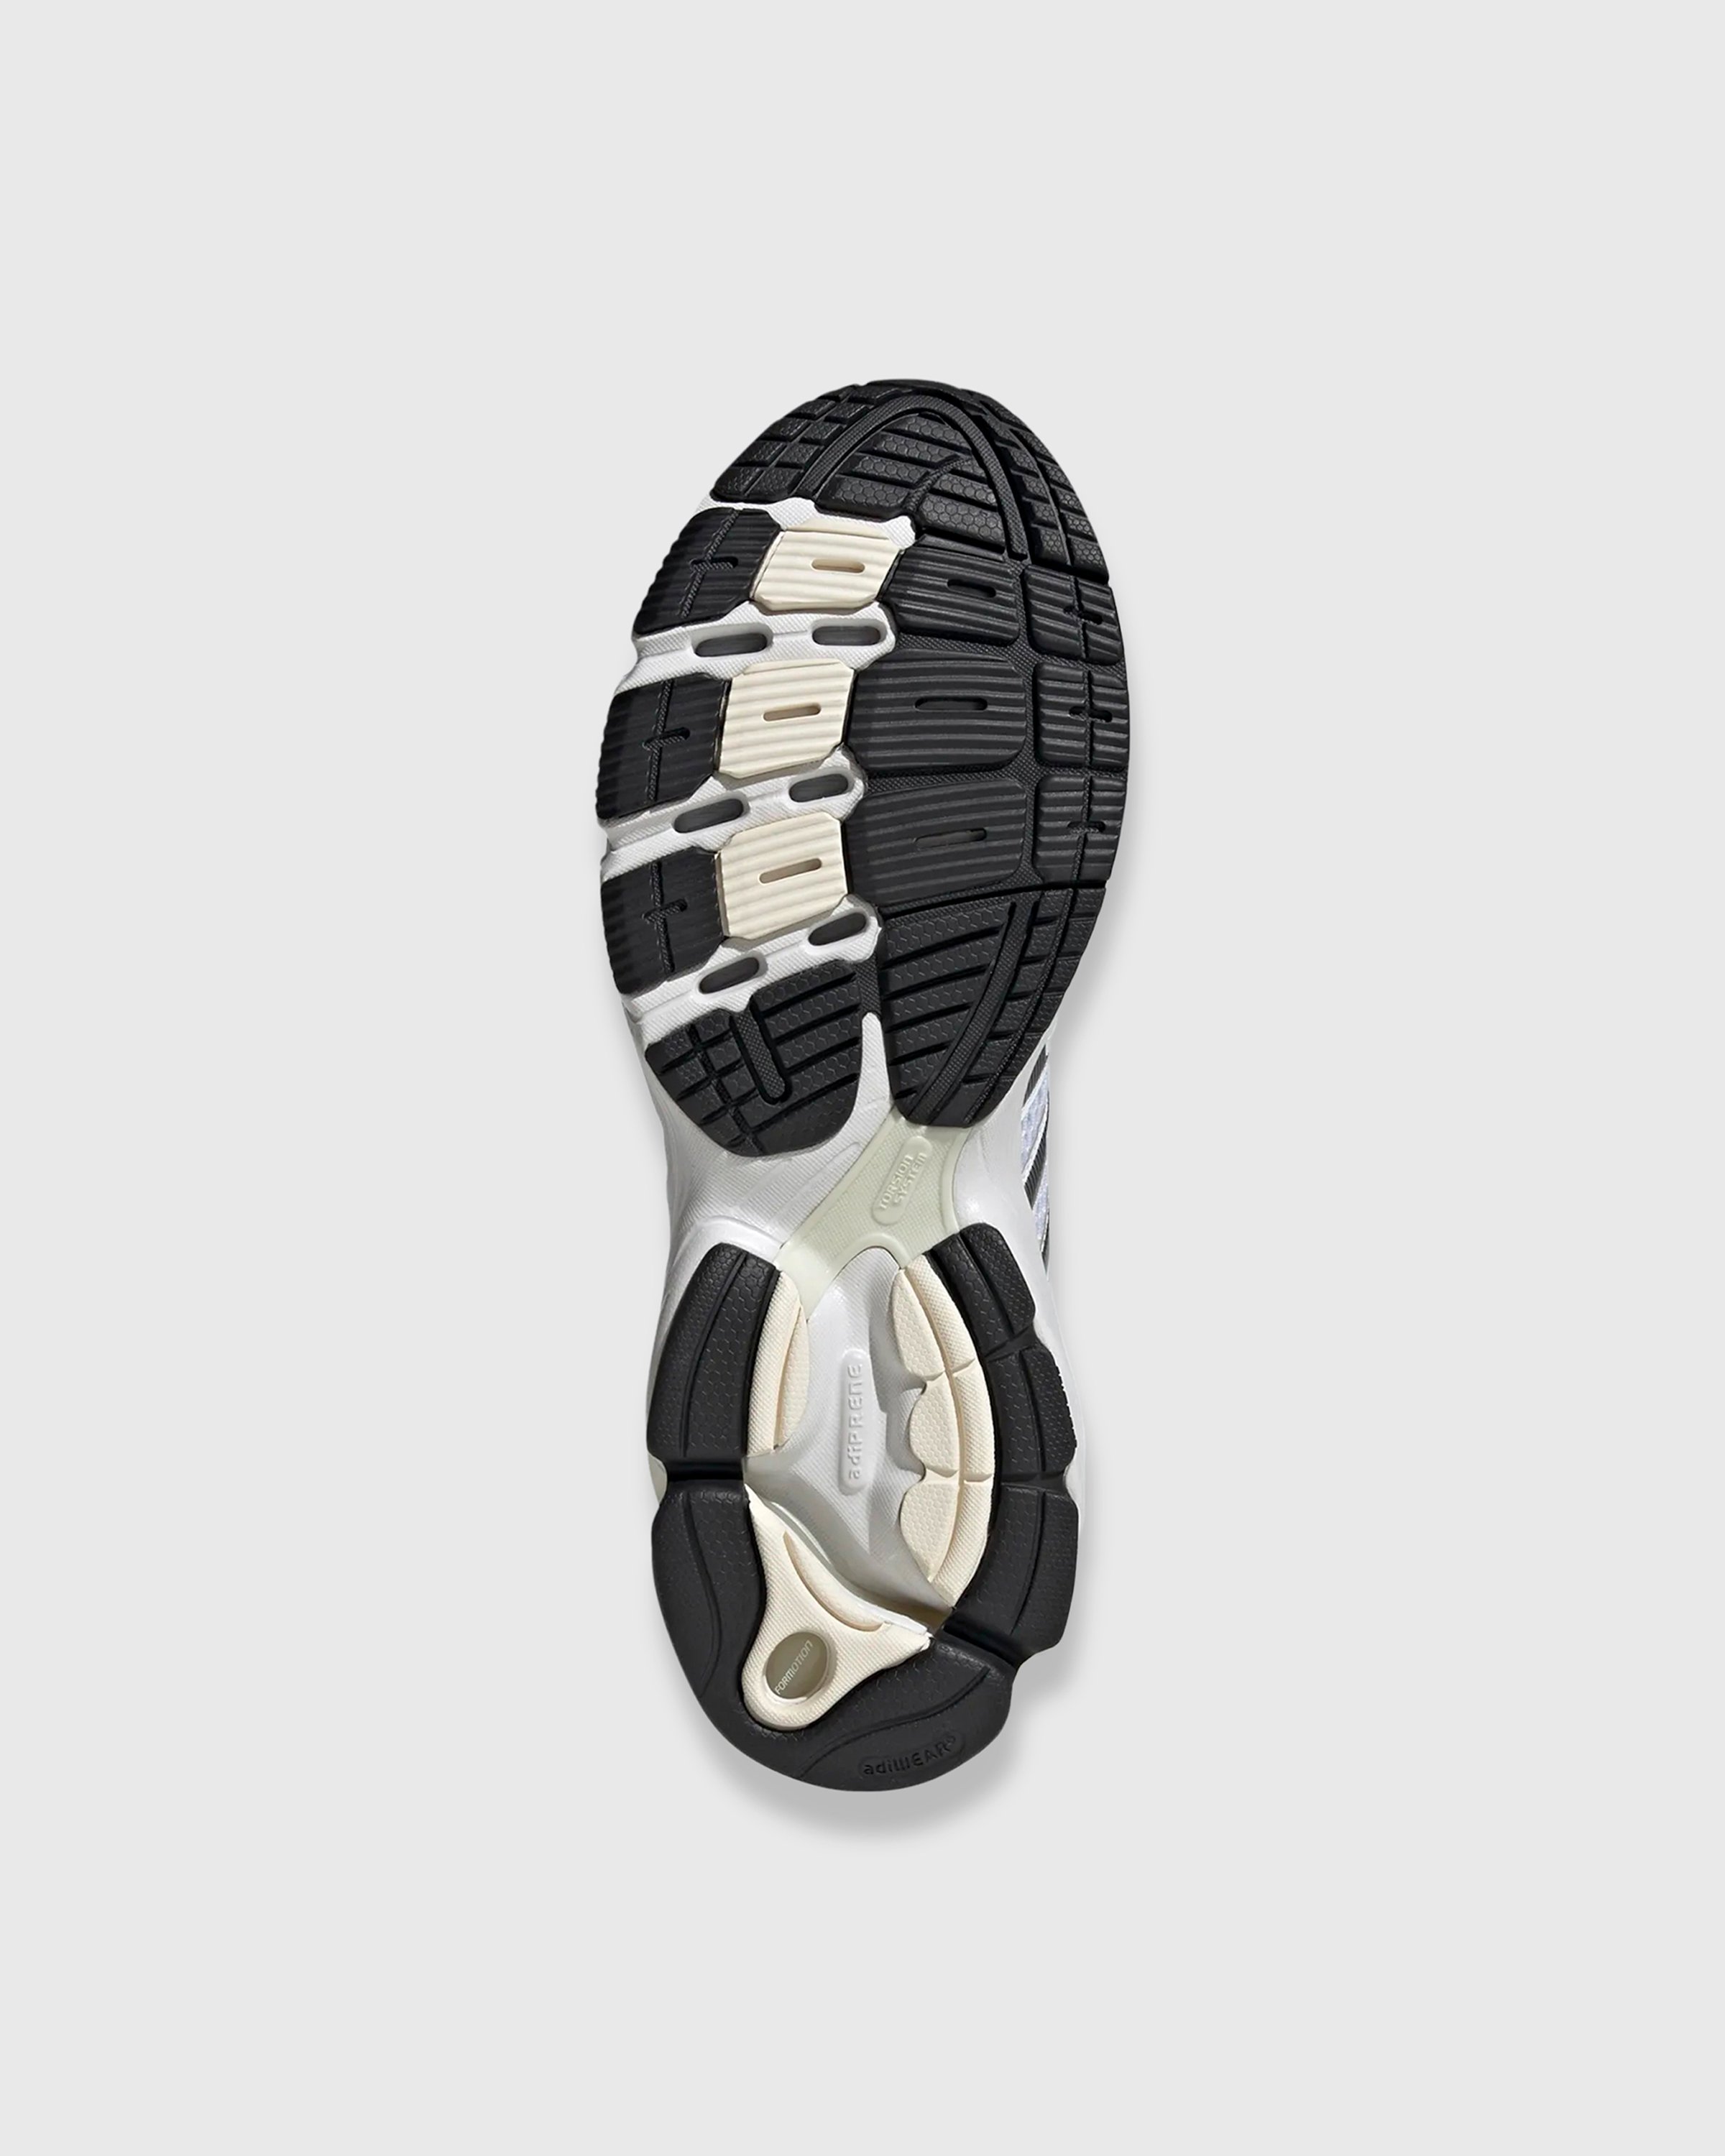 Adidas - SUPERNOVA CUSHION 7 FTWWHT/SILVMT/CRYWHT - Footwear - White - Image 6